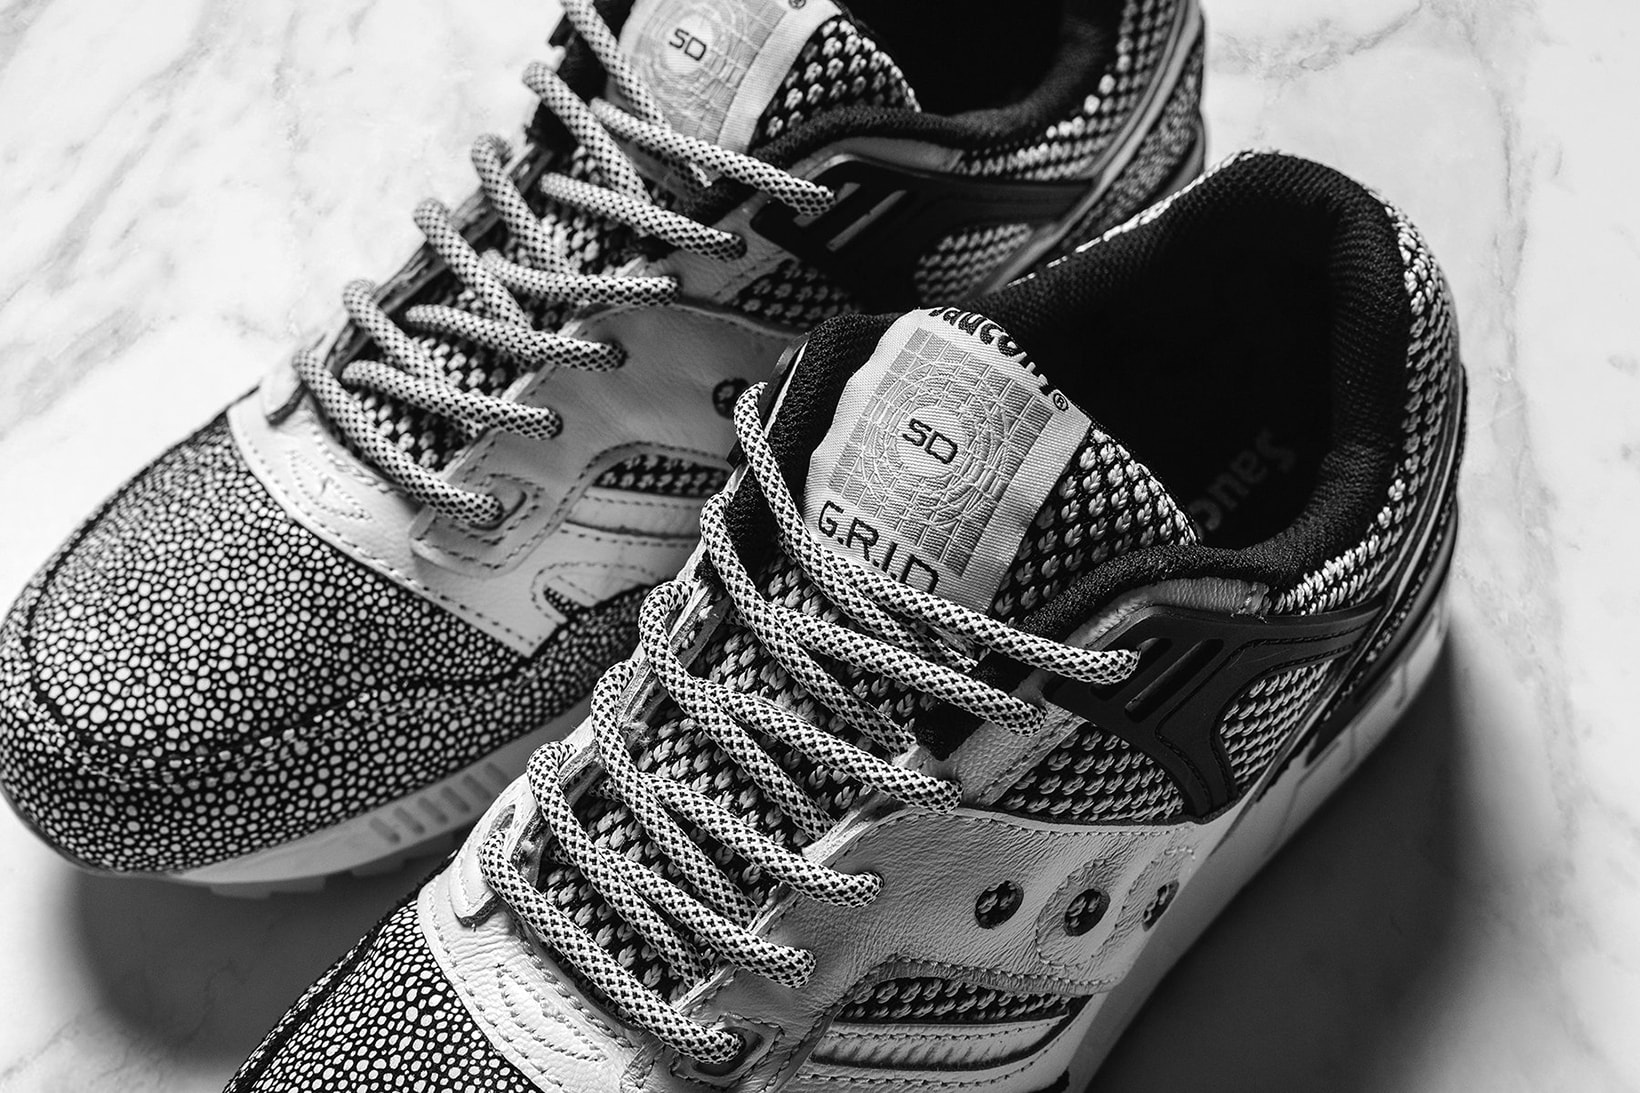 Saucony Grid SD MD Eel 2017 Fall Winter November Release Date Info Sneakers Shoes Footwear Feature Sneaker Drop Release Info white black feature las vegas